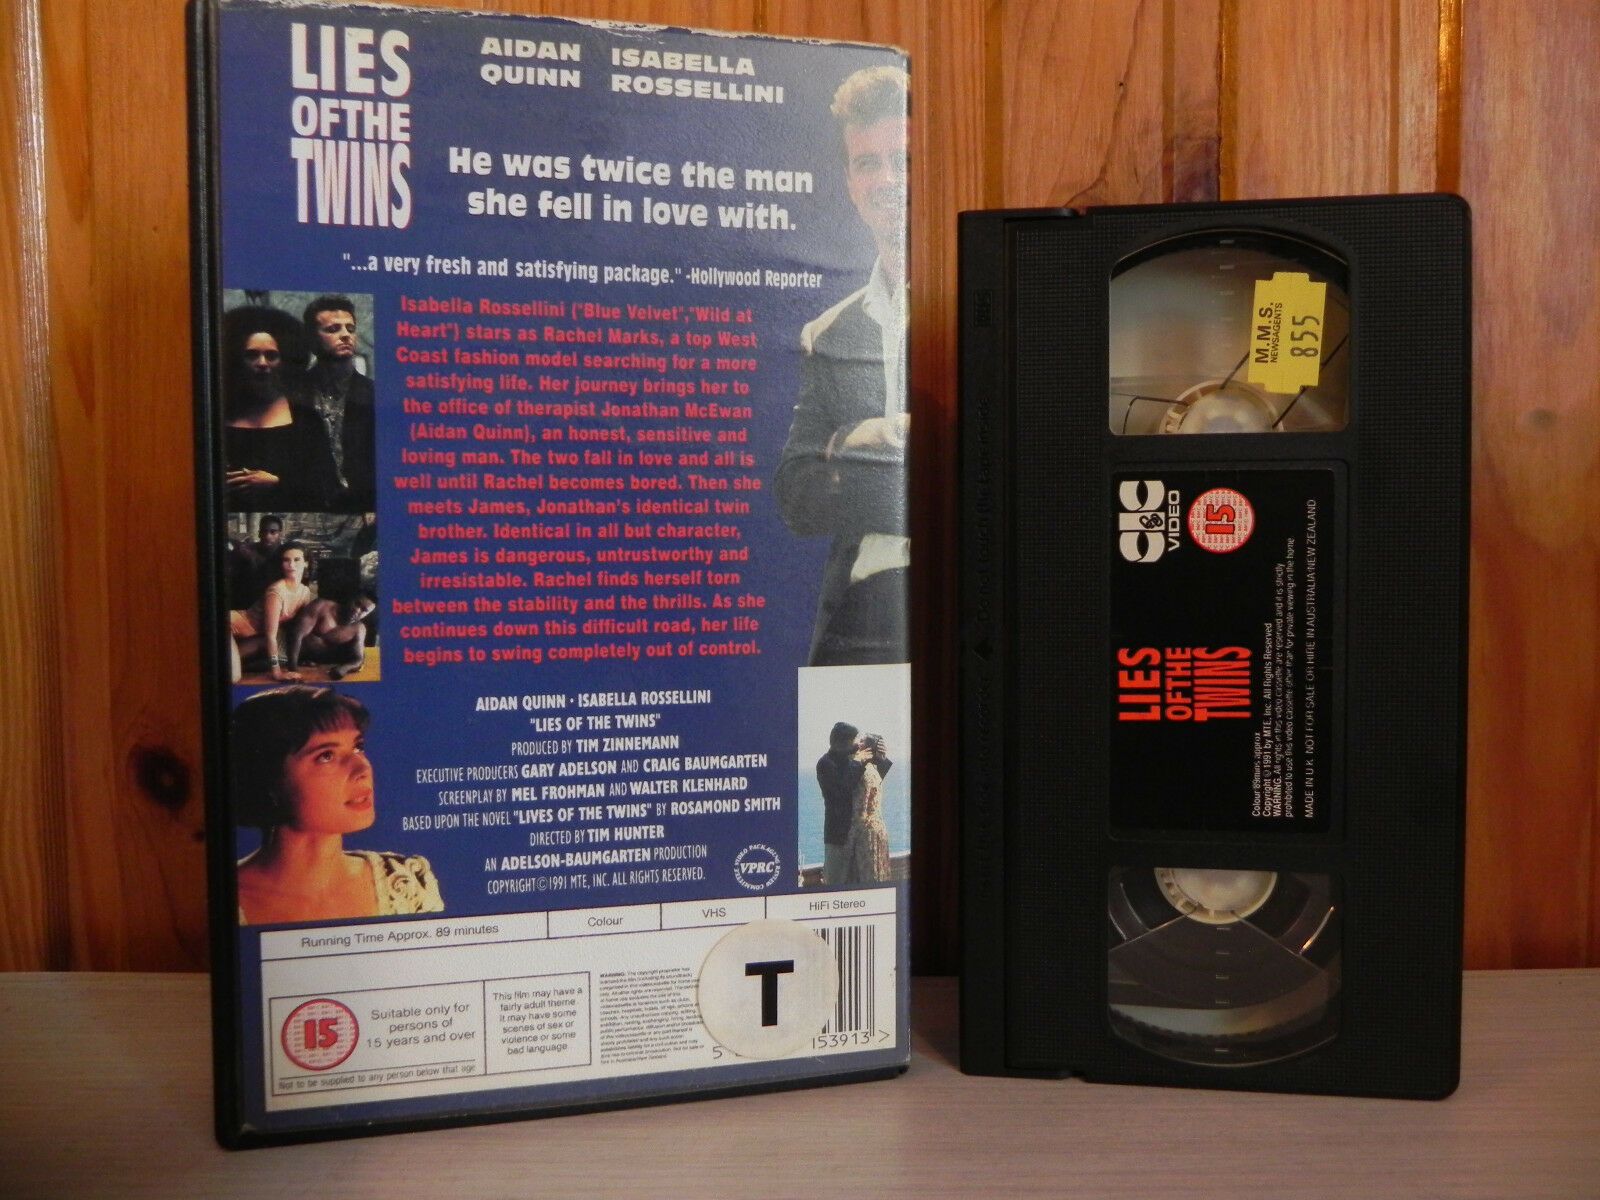 Lies Of The Twins - Aidan Quinn - Big Box - Dangerous Thriller - Ex-Rental - VHS-